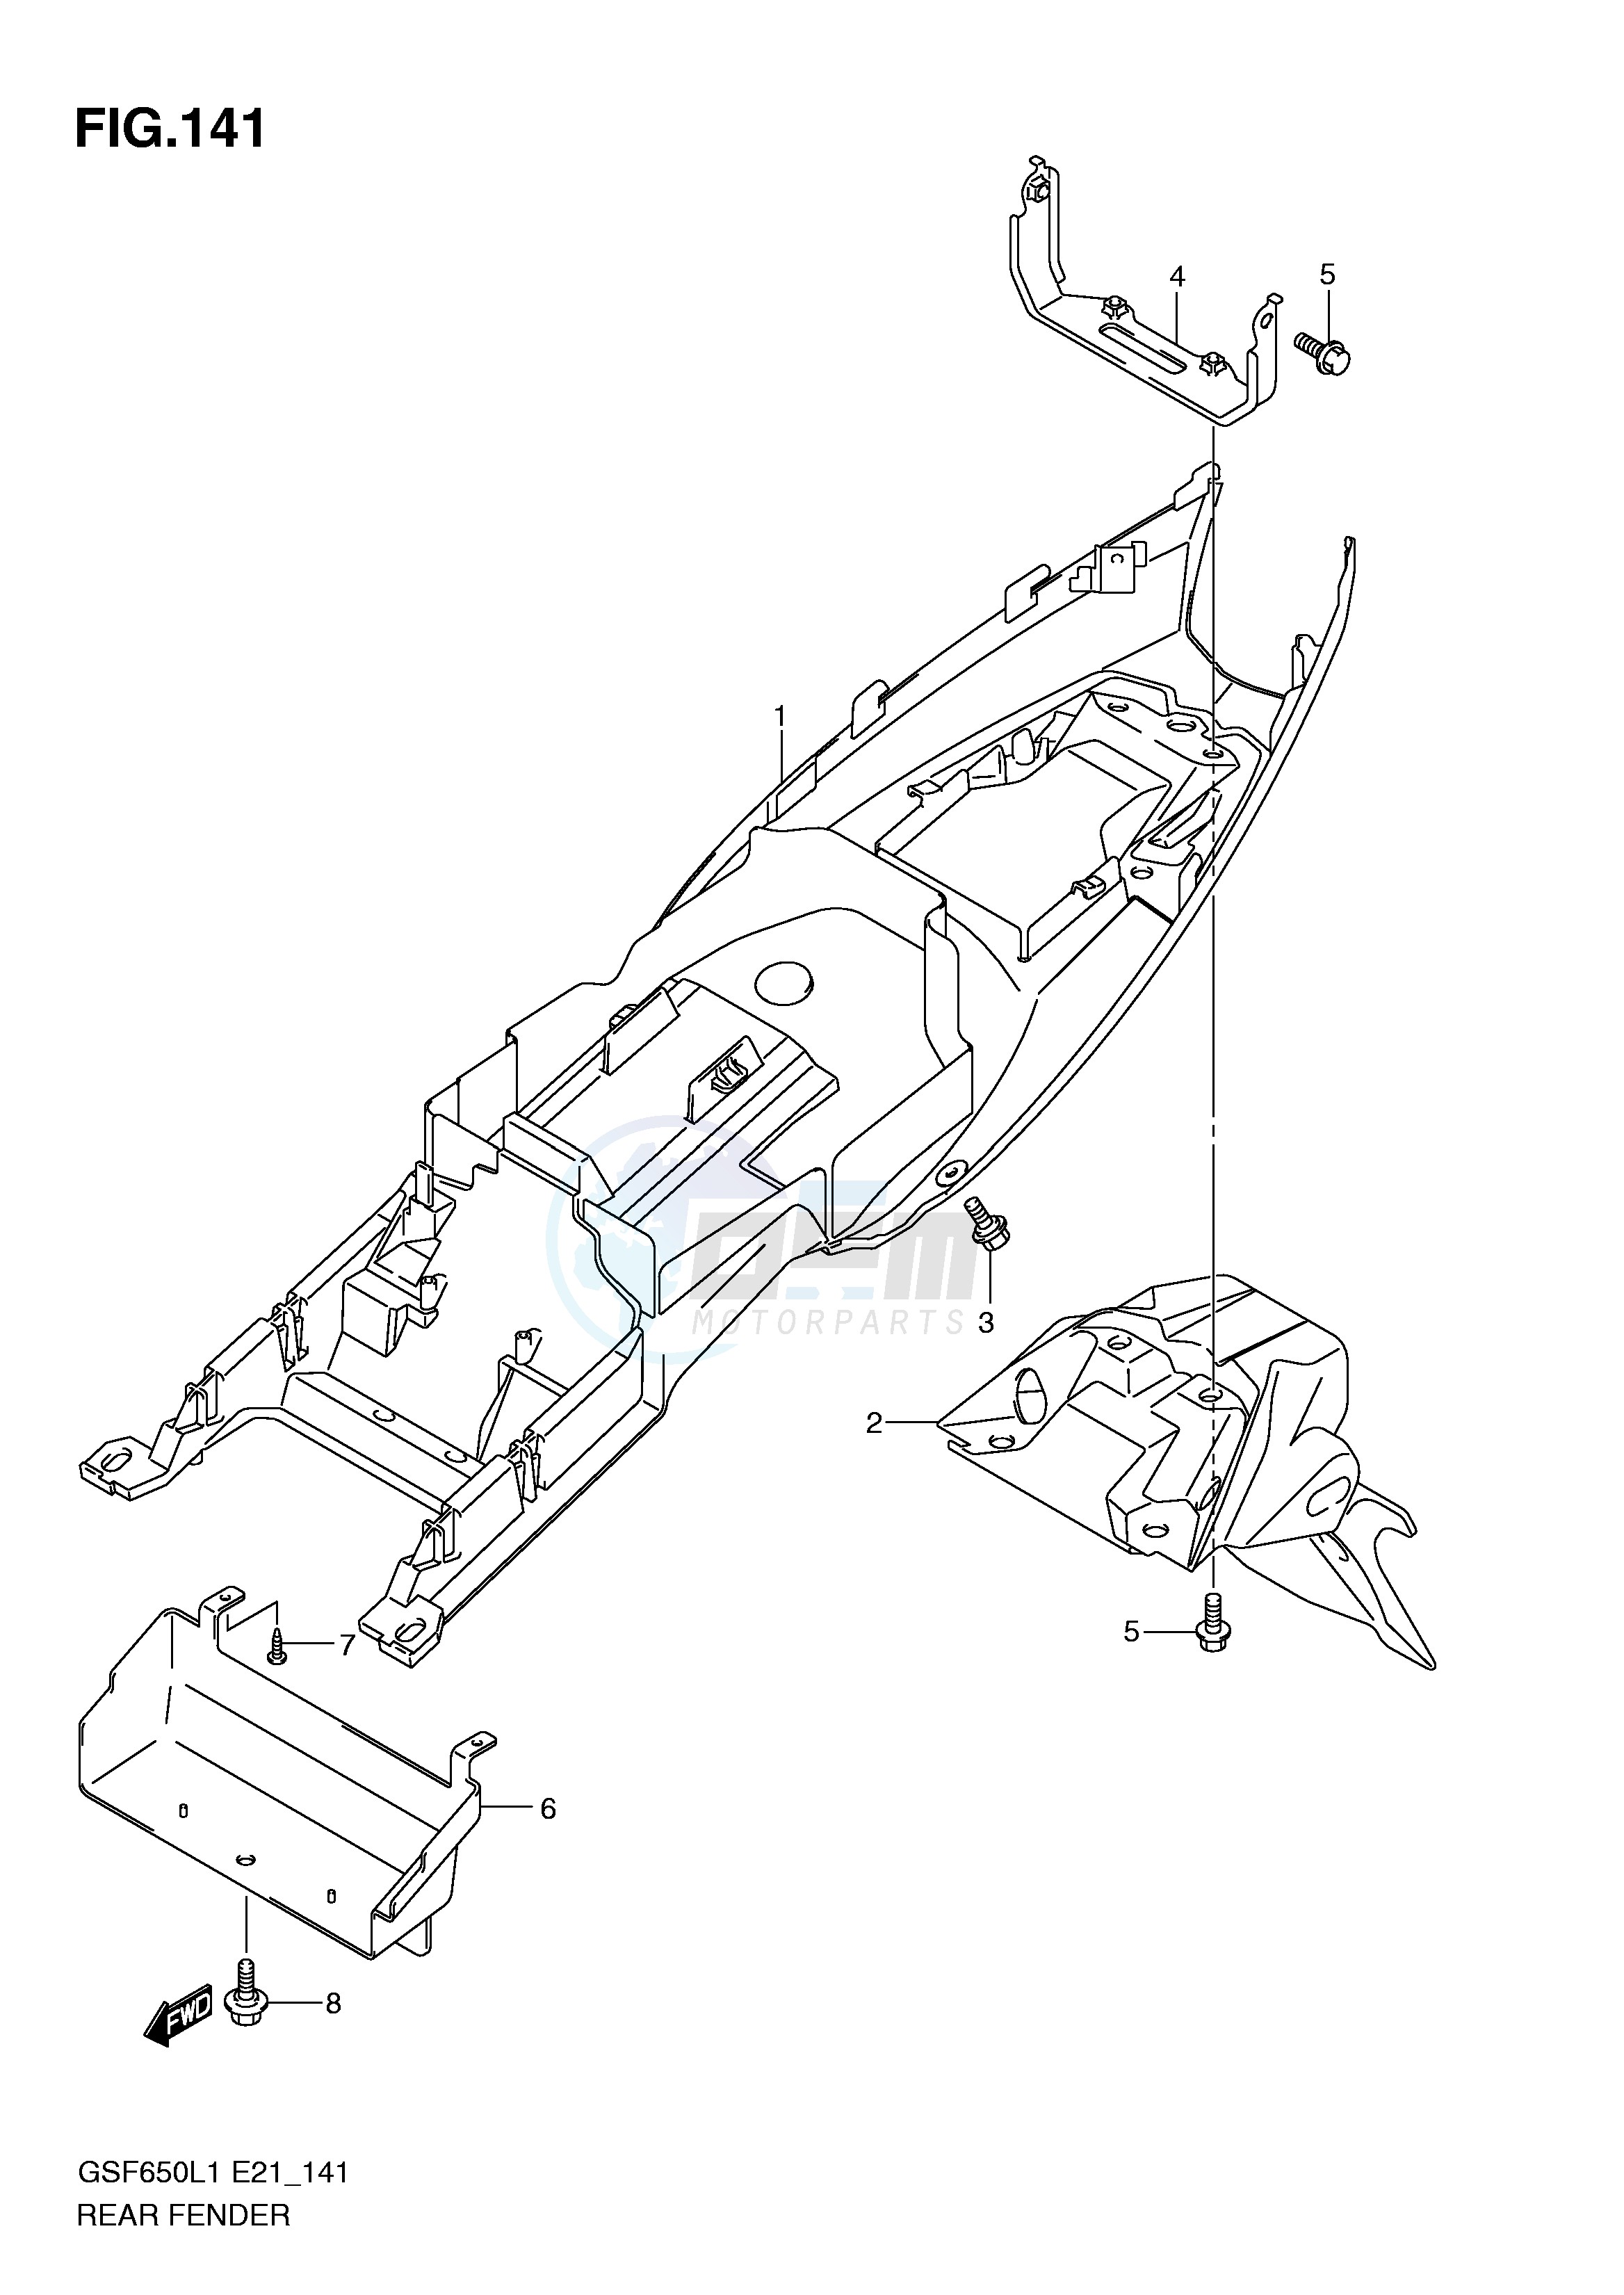 REAR FENDER (GSF650SAL1 E21) blueprint